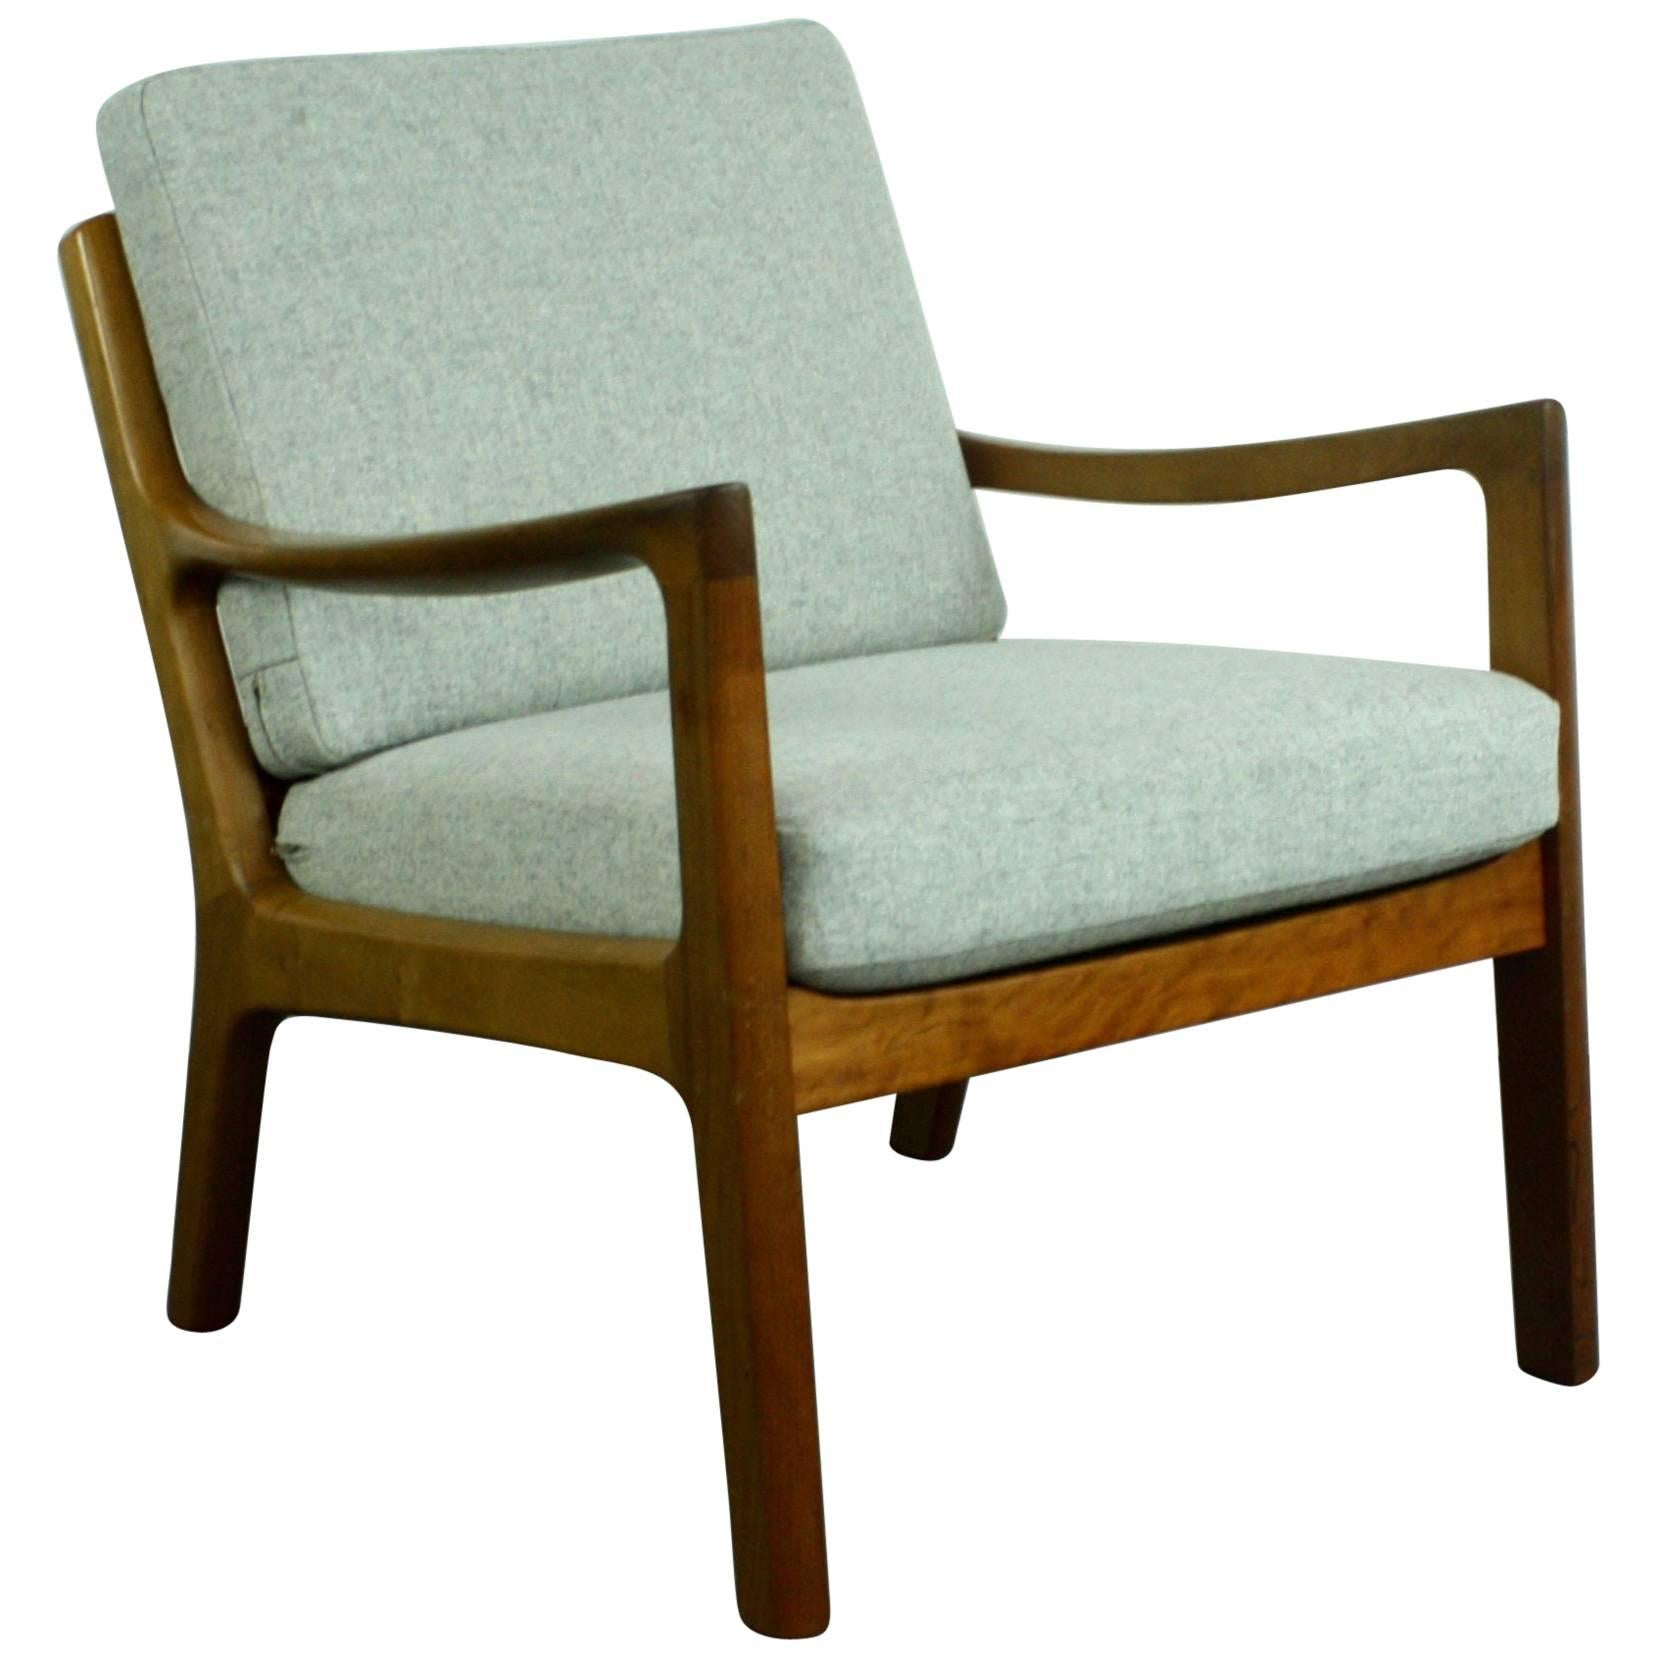 Ole Wanscher for France & Son Denmark 1960s Teak Lounge Chair Grey Upholstery For Sale